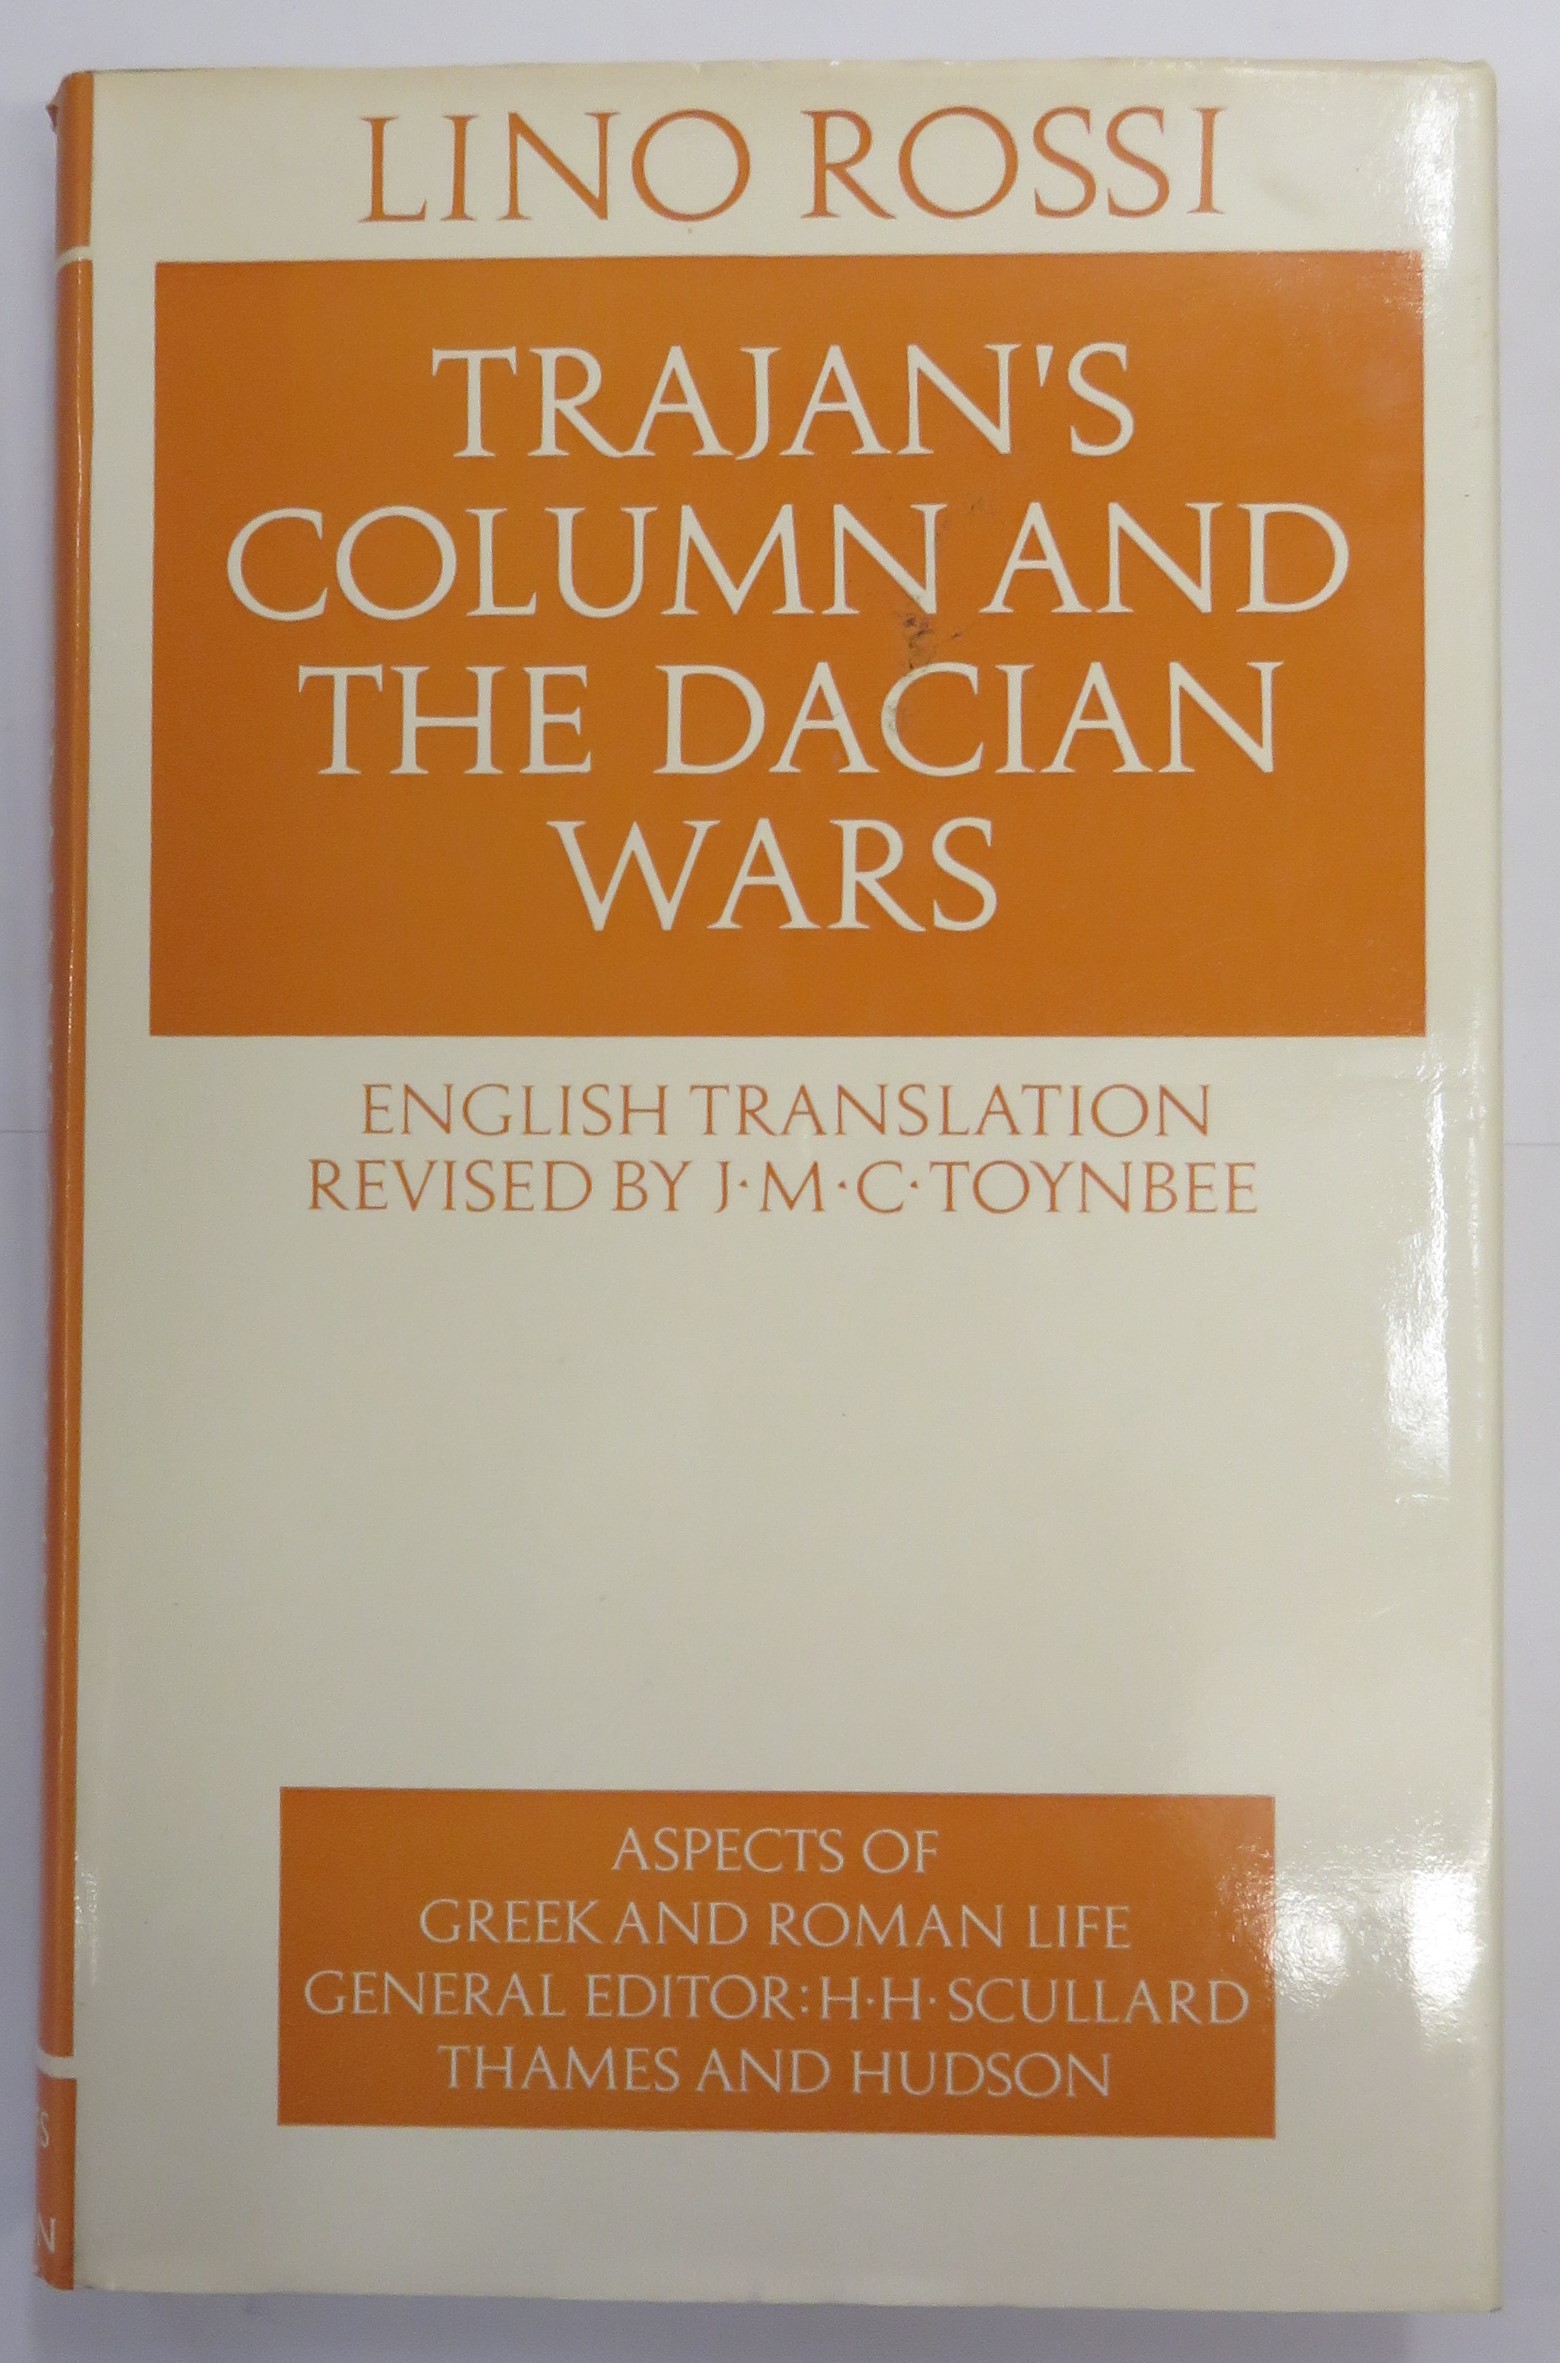 Trajan's Column and the Dacian Wars